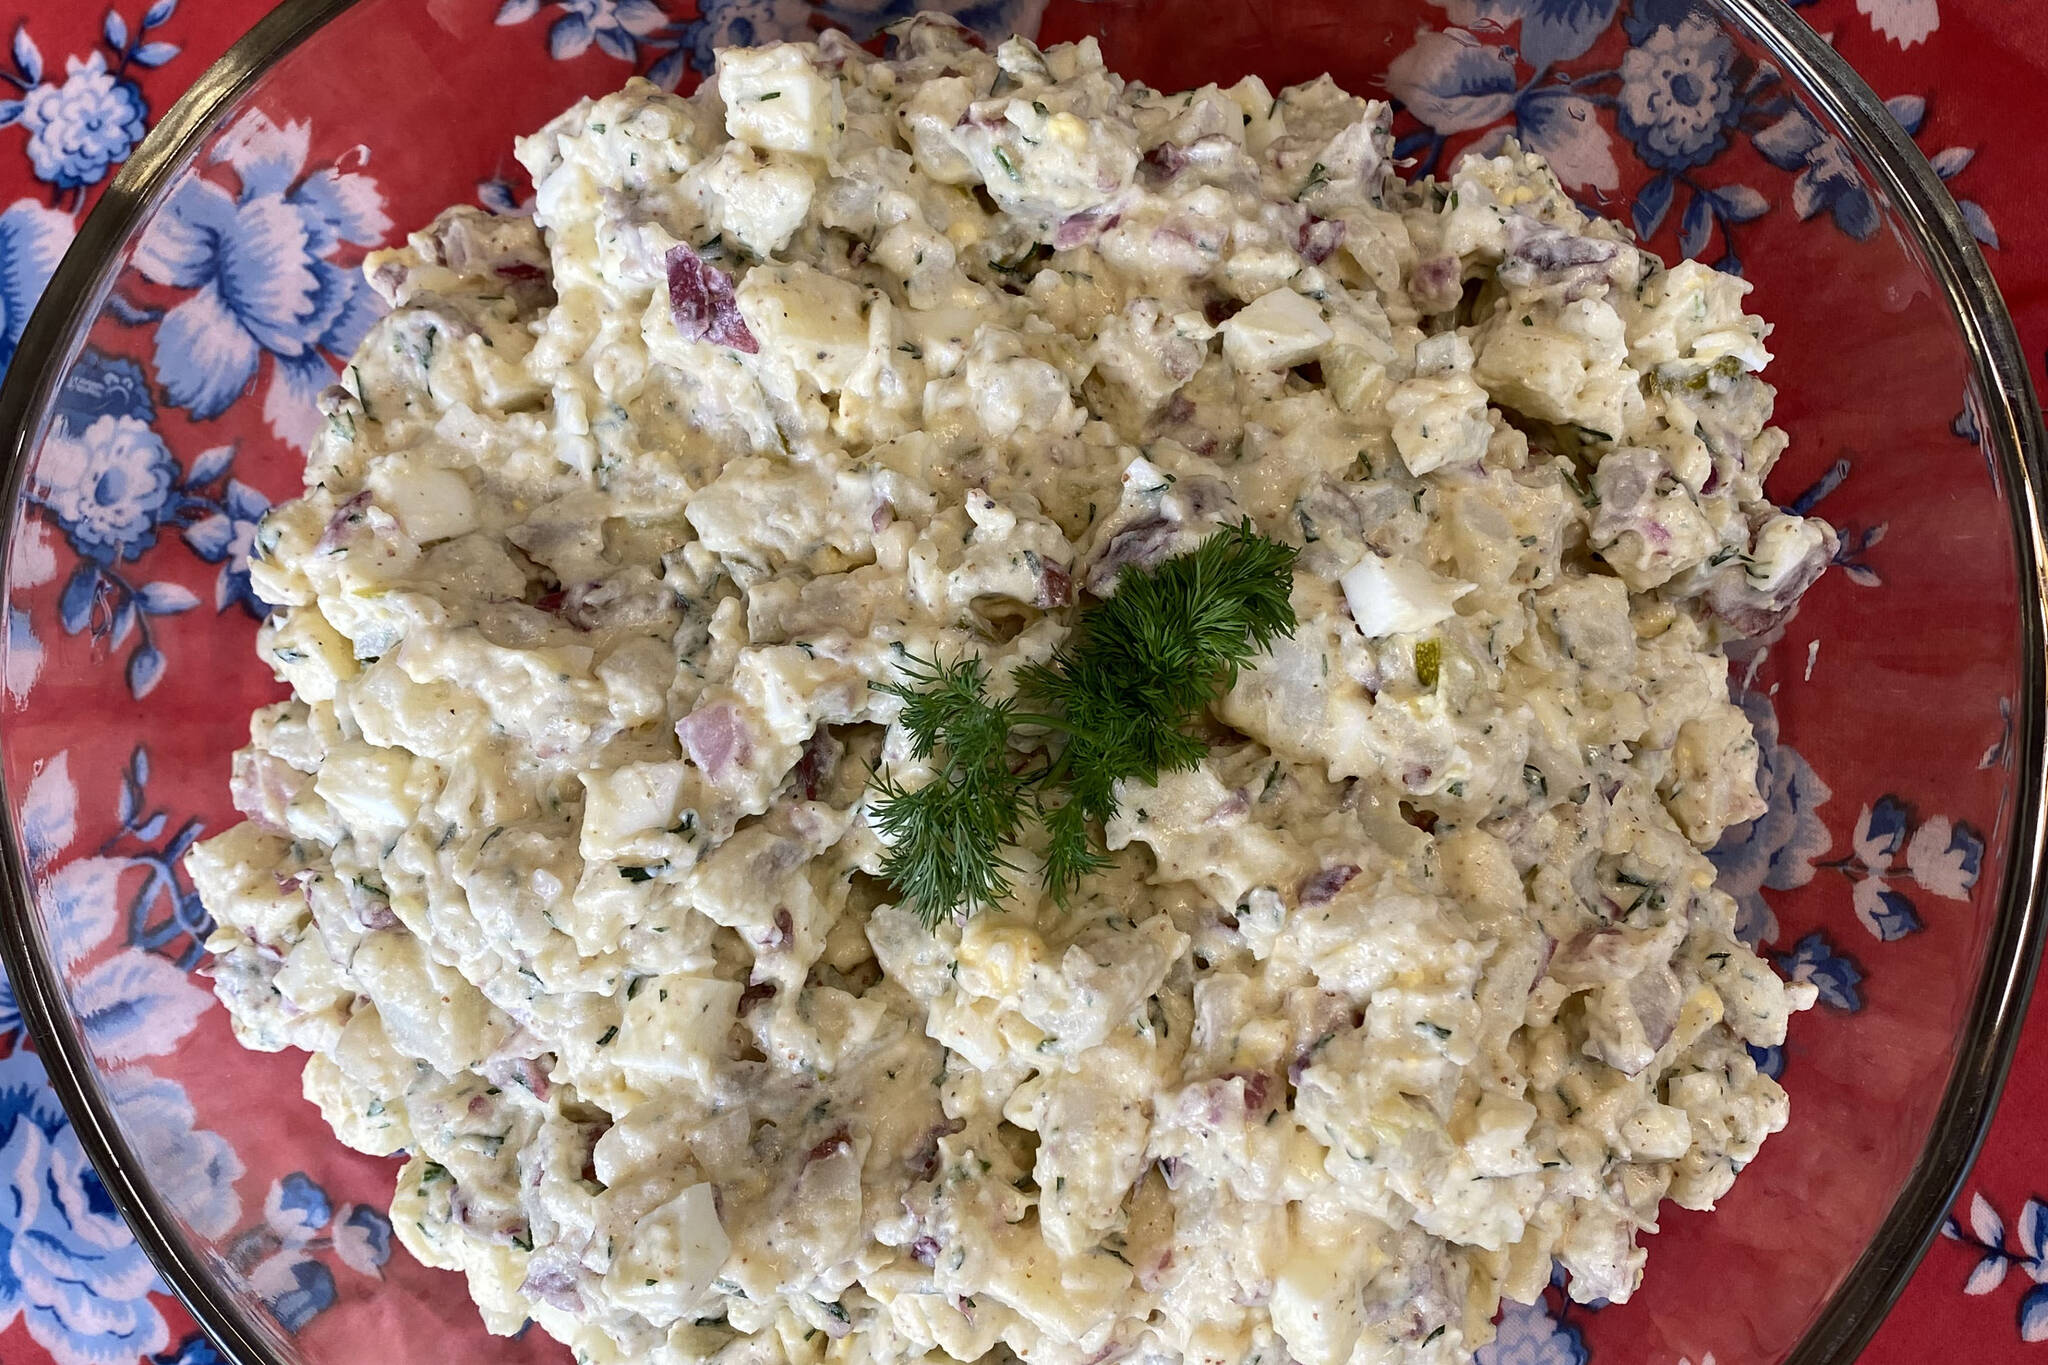 This potato salad recipe incorporates eggs, apples and Greek yogurt into the classic barbecue fare. (Photo by Tressa Dale/Peninsula Clarion)